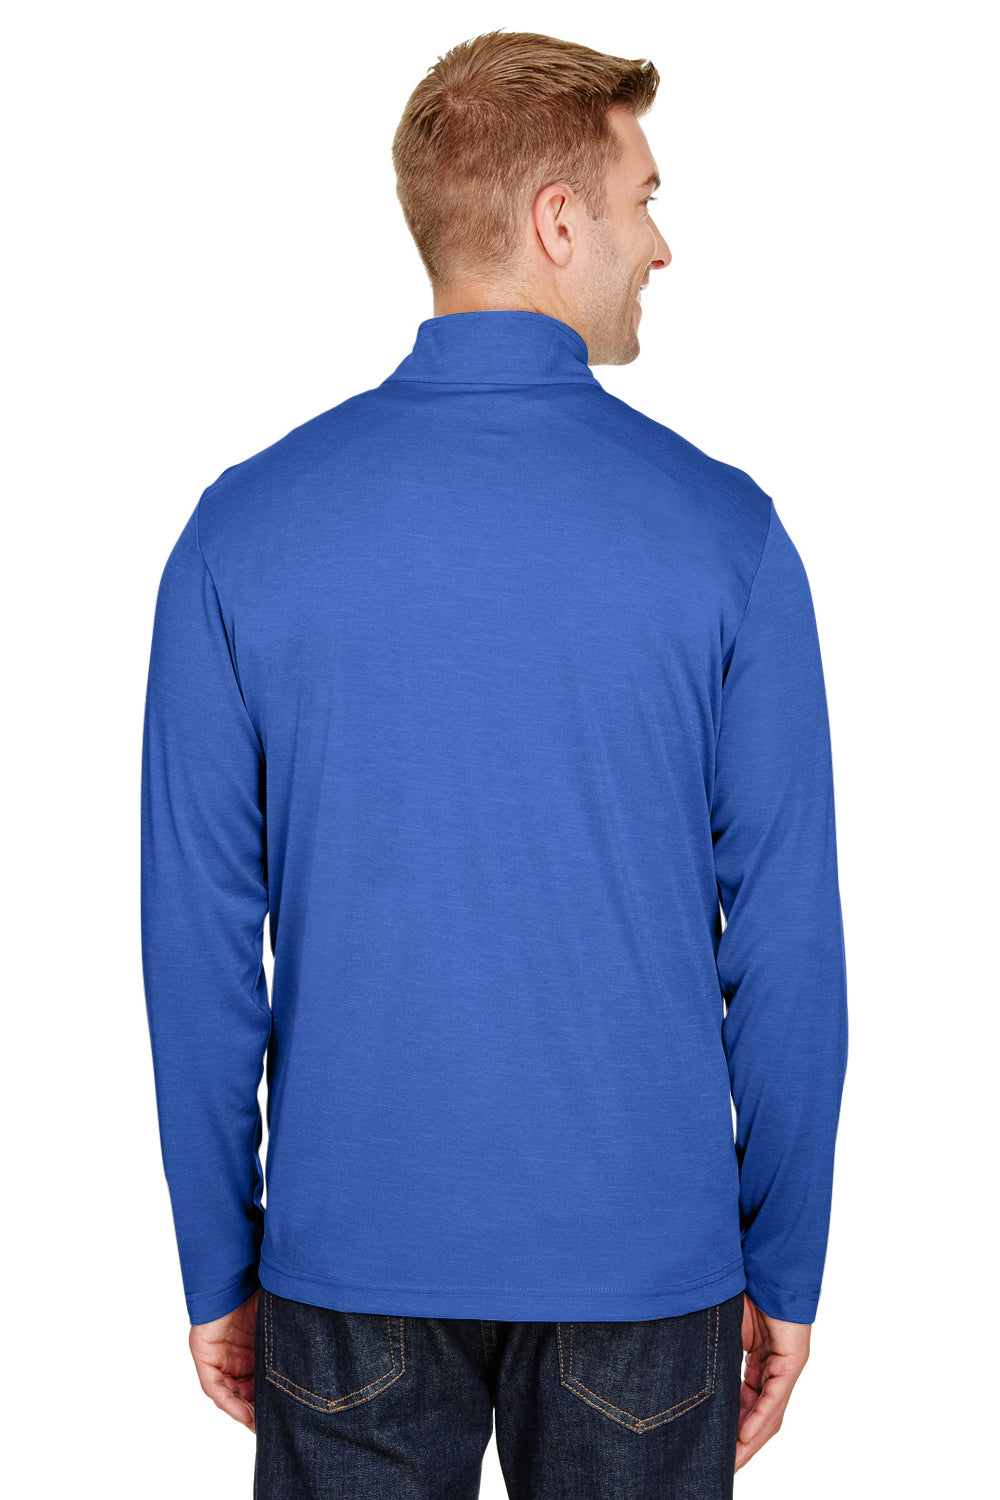 Team 365 TT31H Mens Zone Sonic Performance Moisture Wicking 1/4 Zip Sweatshirt Royal Blue Back